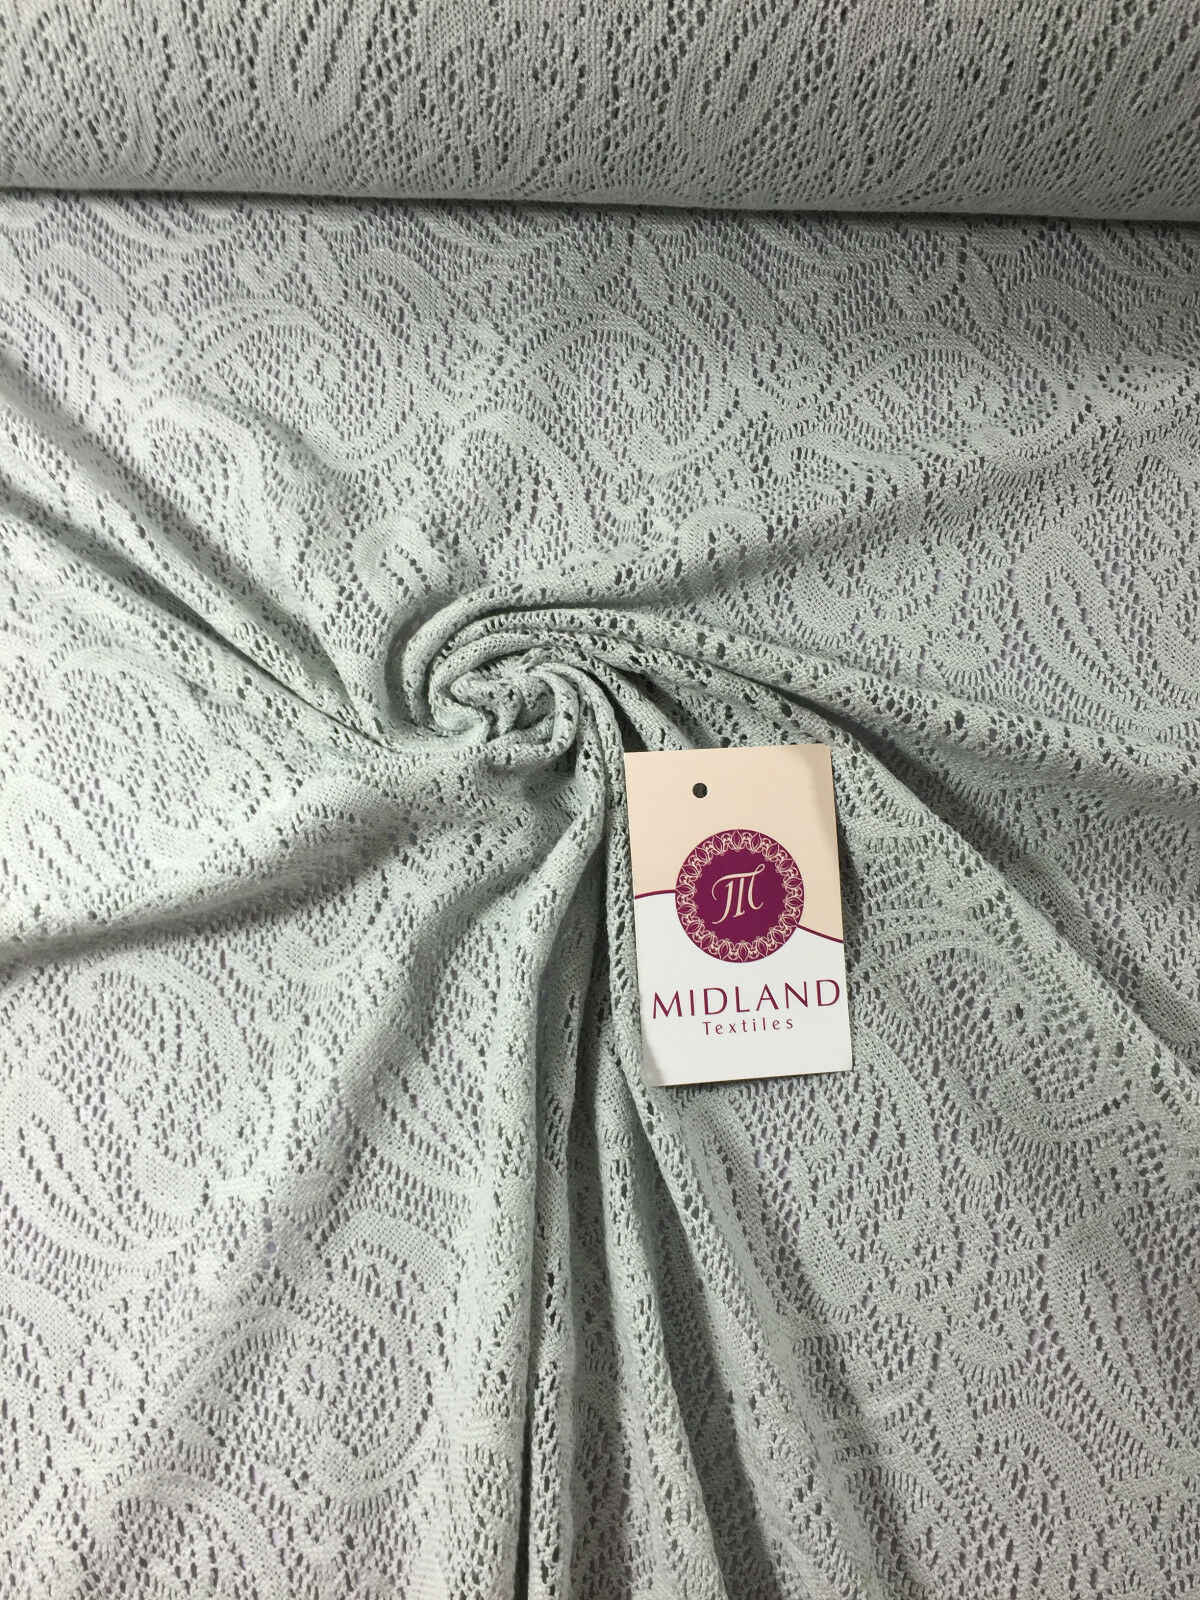 Floral Paisley Soft Lace Mesh Crochet Semi Transparent Dress Fabric 58" Mtex